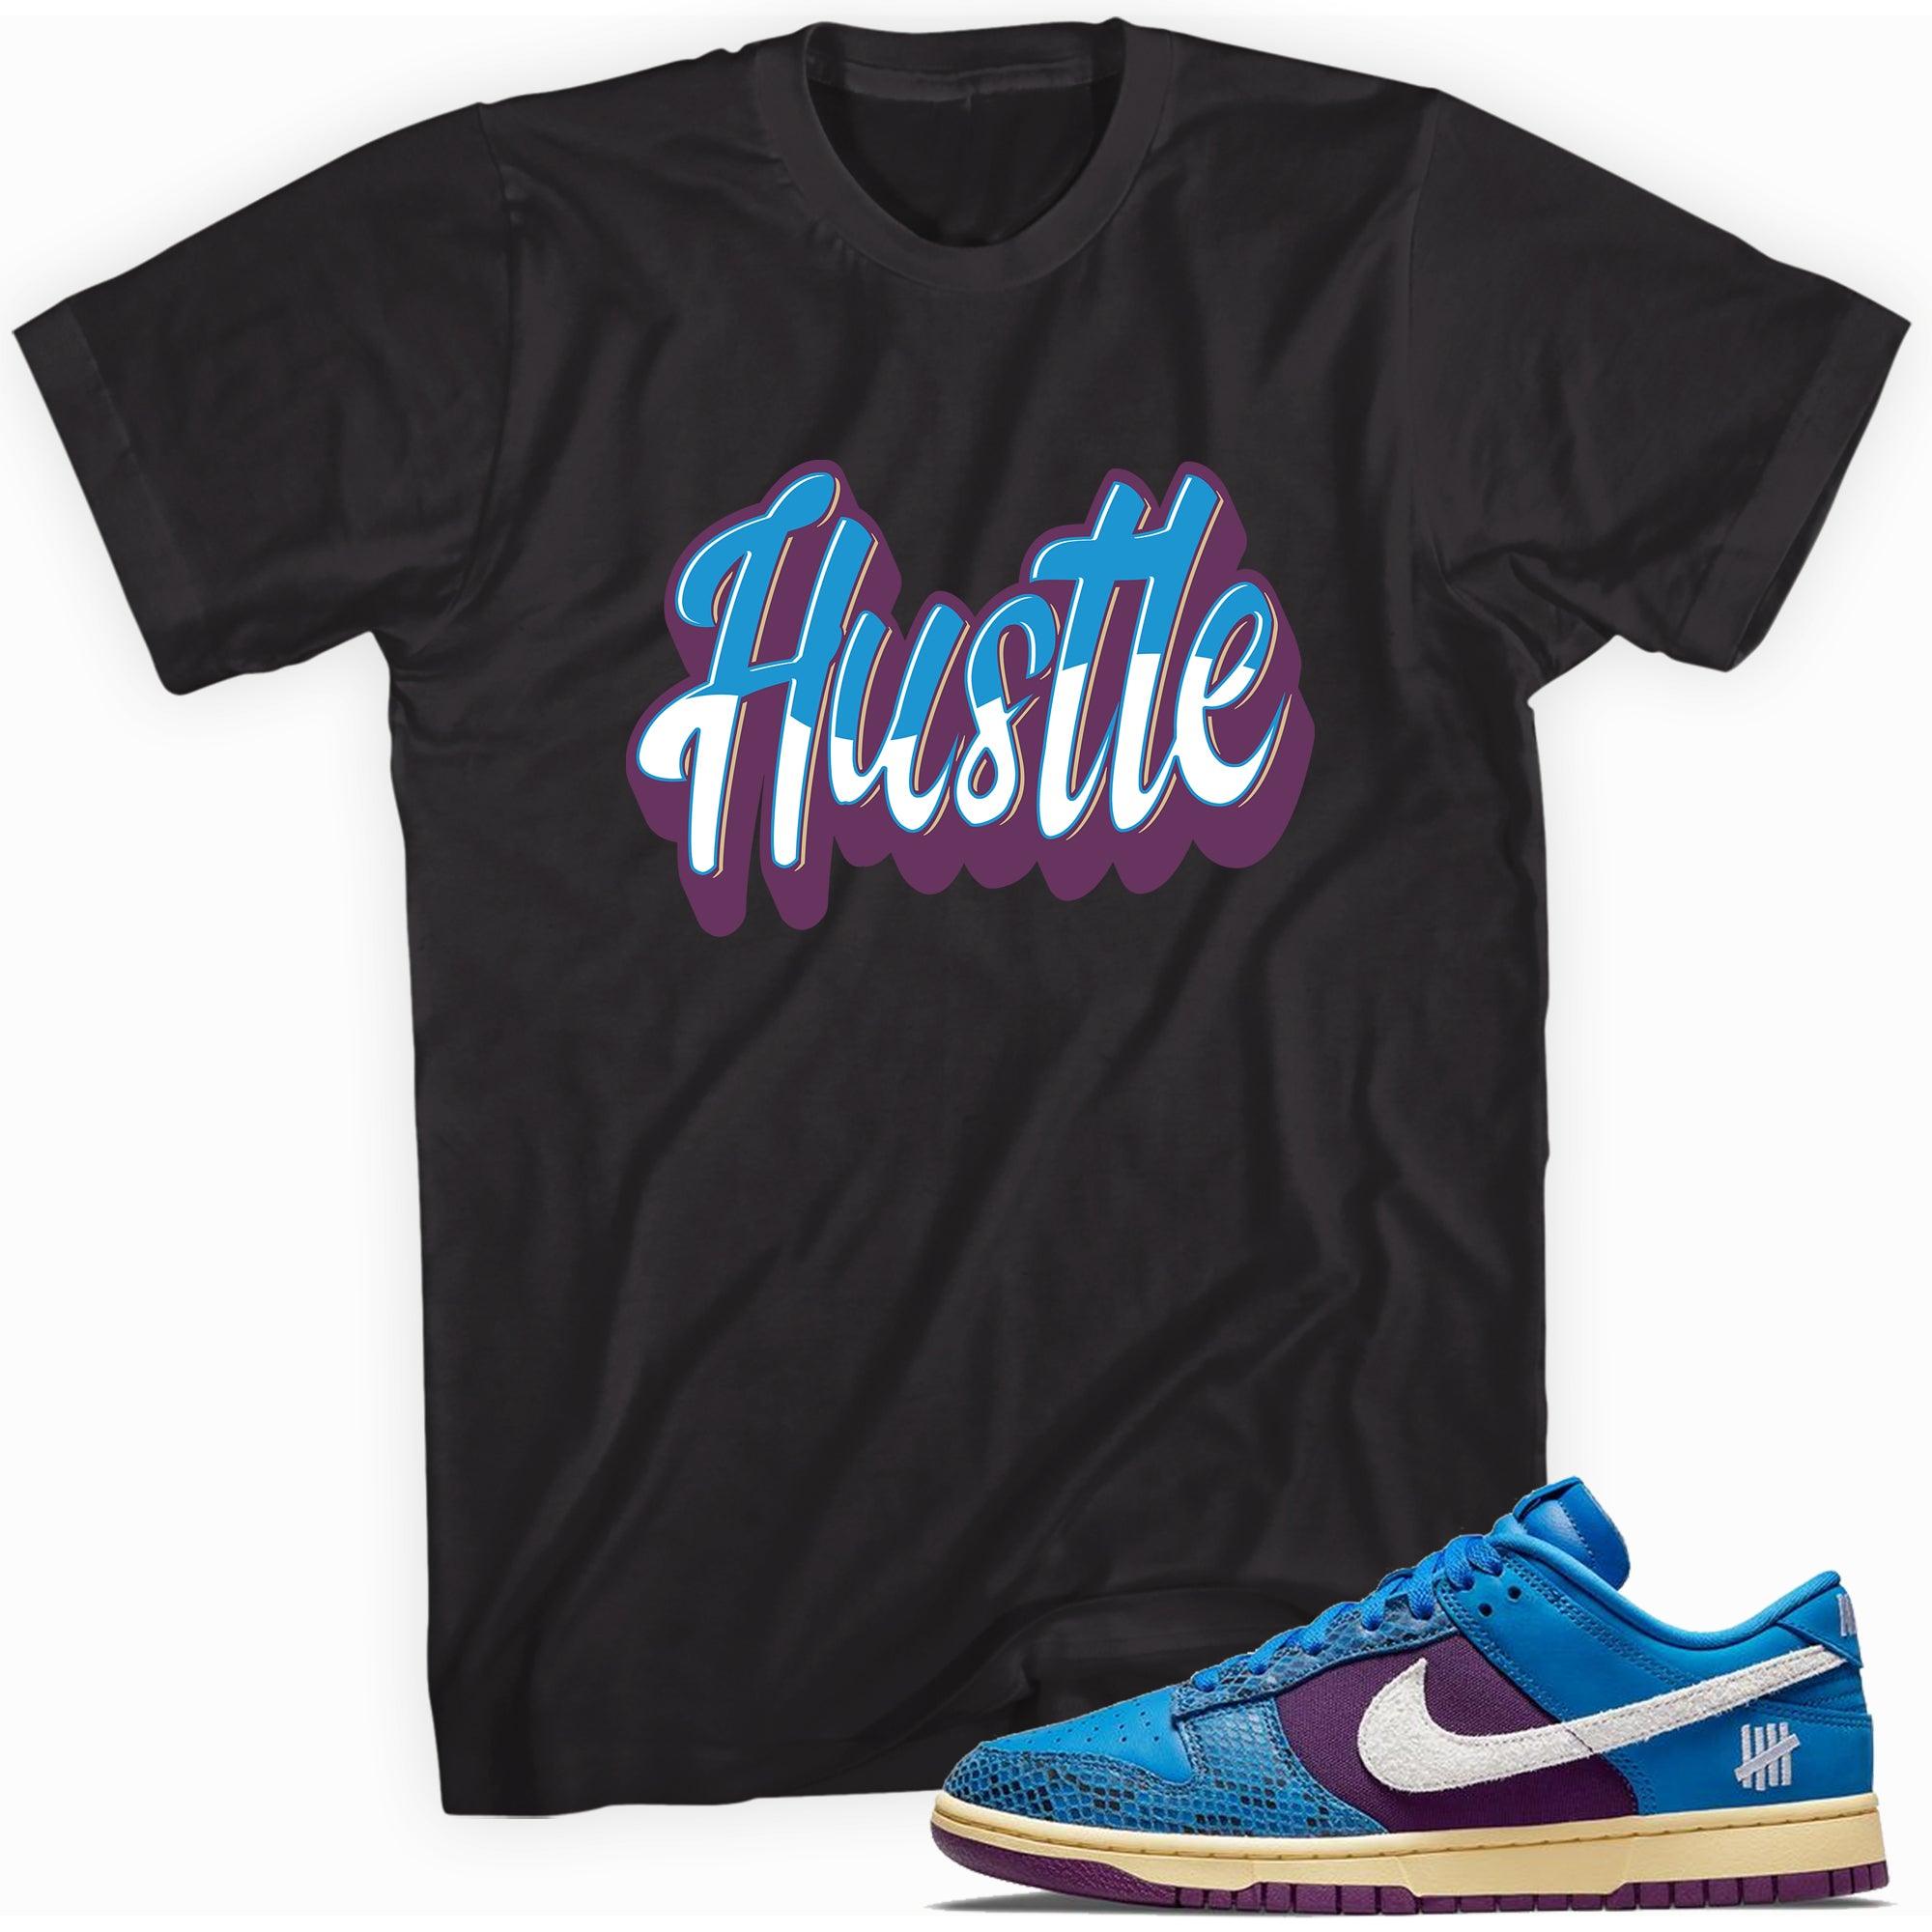 Black Hustle Shirt Nike Dunks Low Undefeated 5 On It Dunk vs AF1 photo